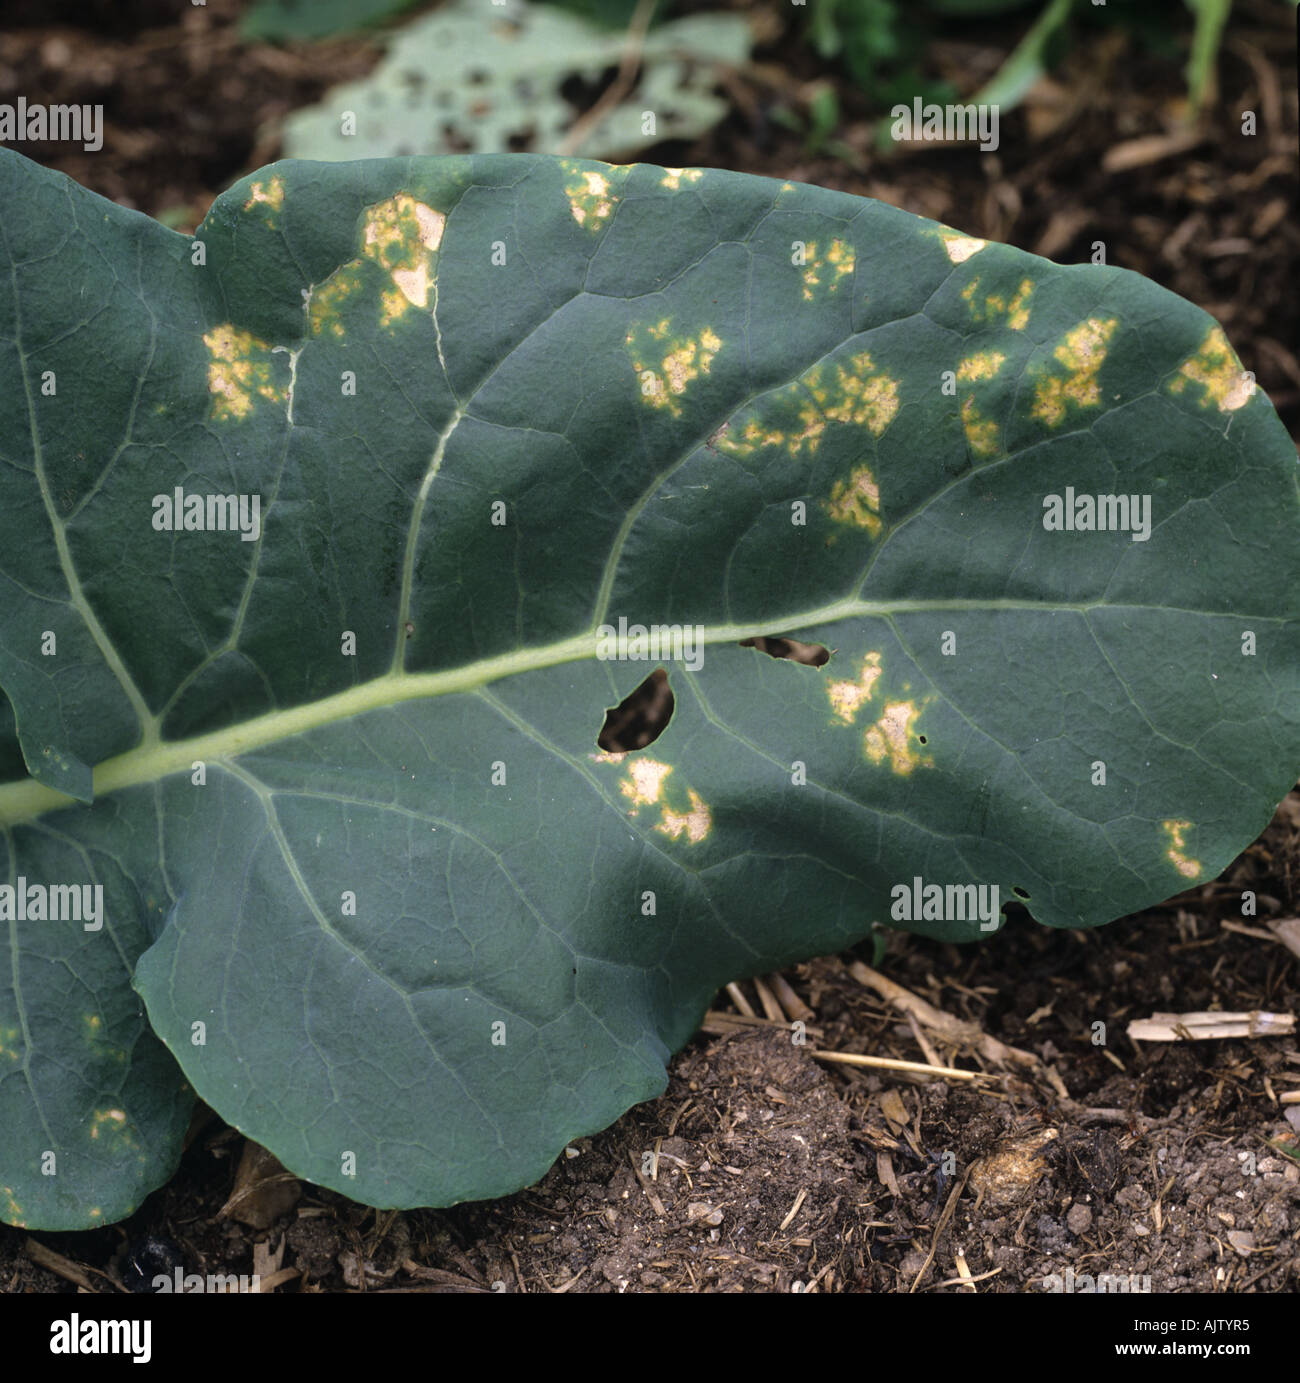 Downy mildew Peronospora parasitica necrotic lesions on a broccoli leaf Stock Photo